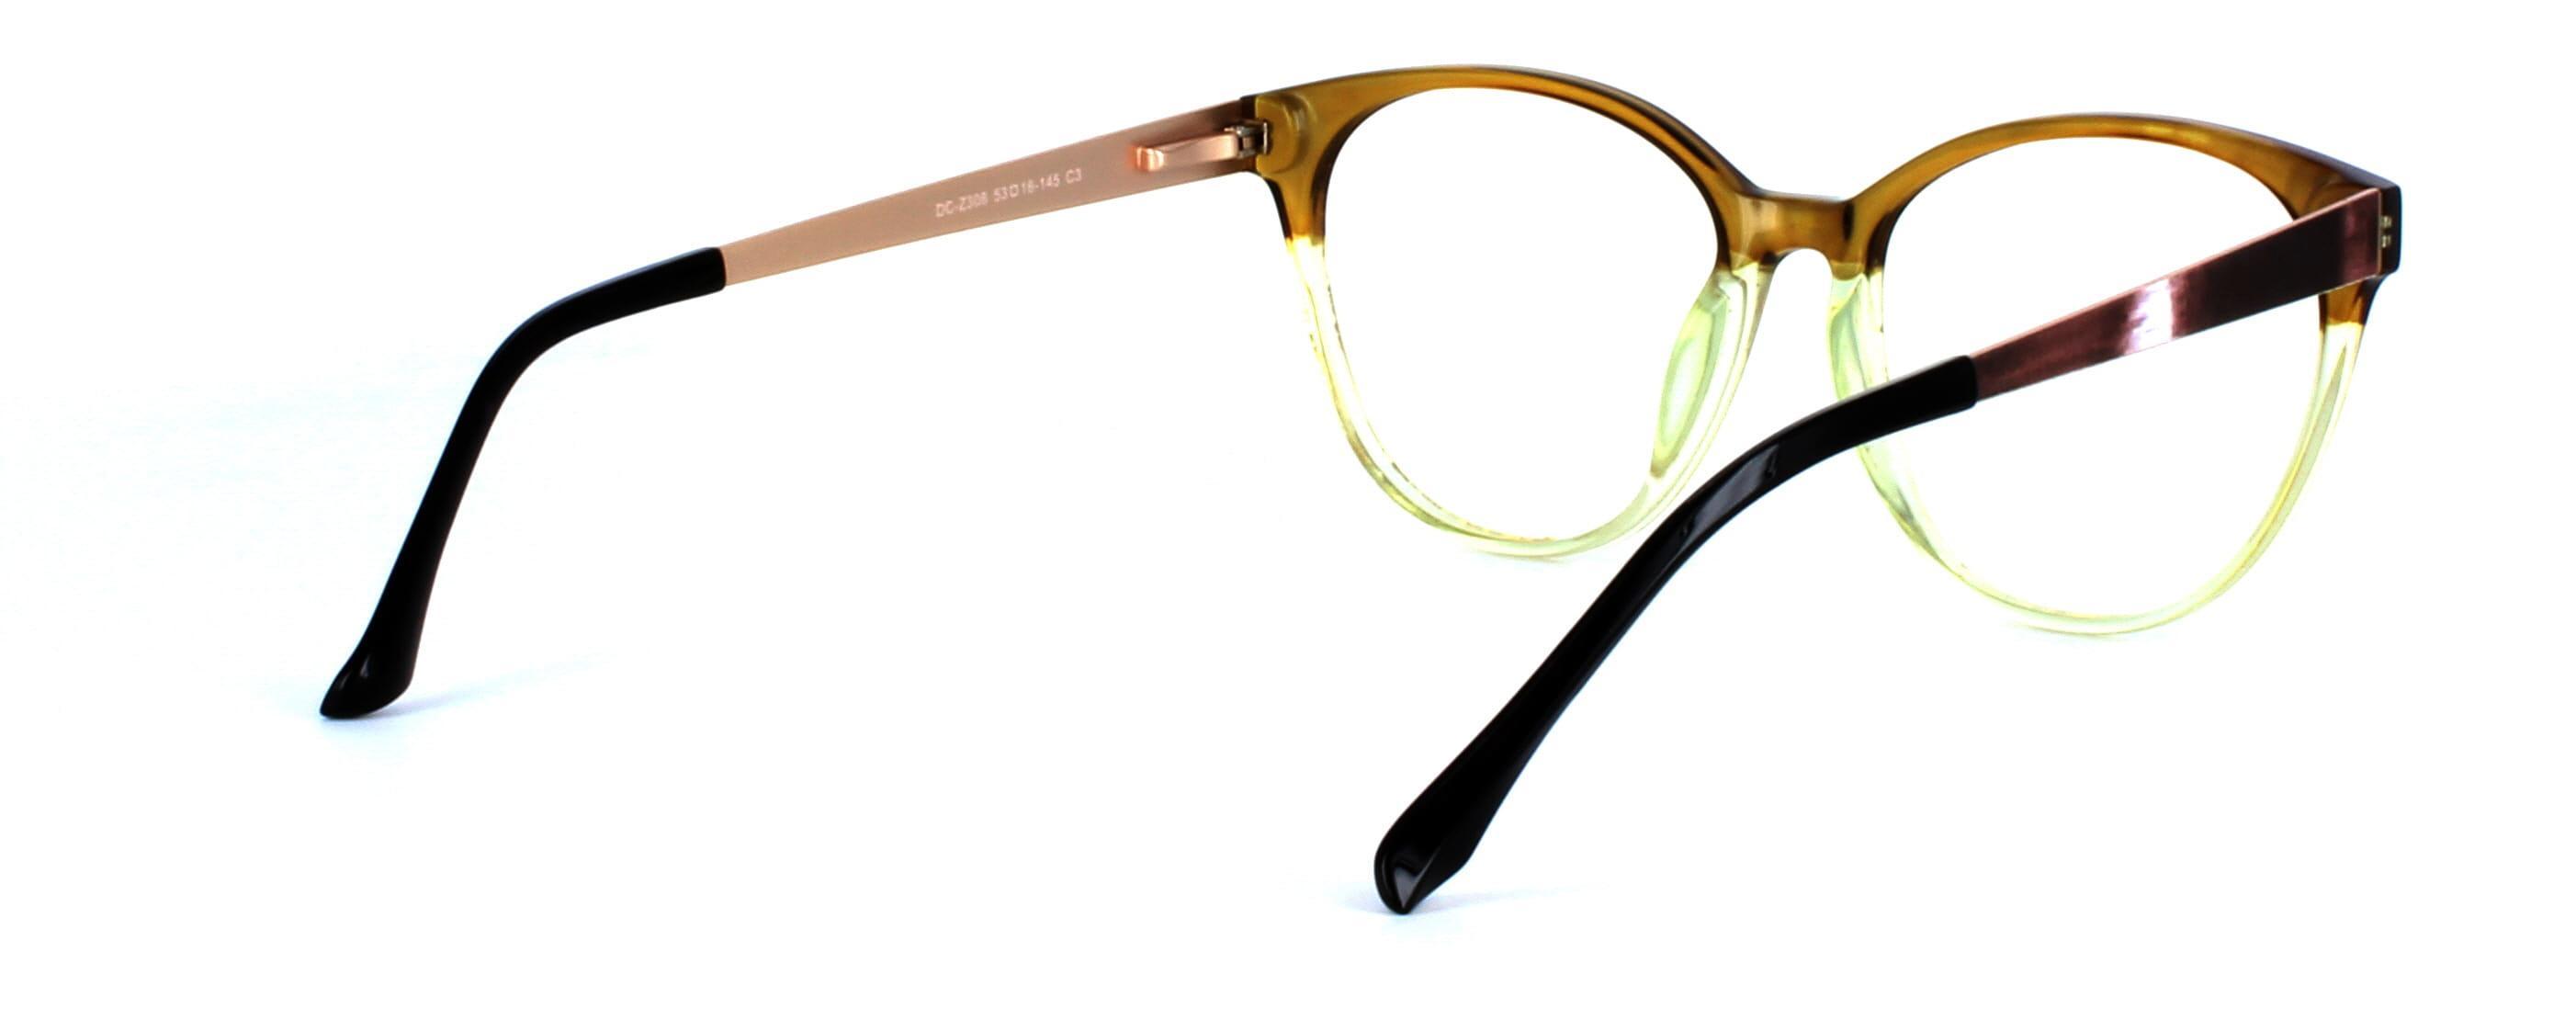 Chamaeleon - Ladies 2-tone plastic glasses - green & brown - image 4